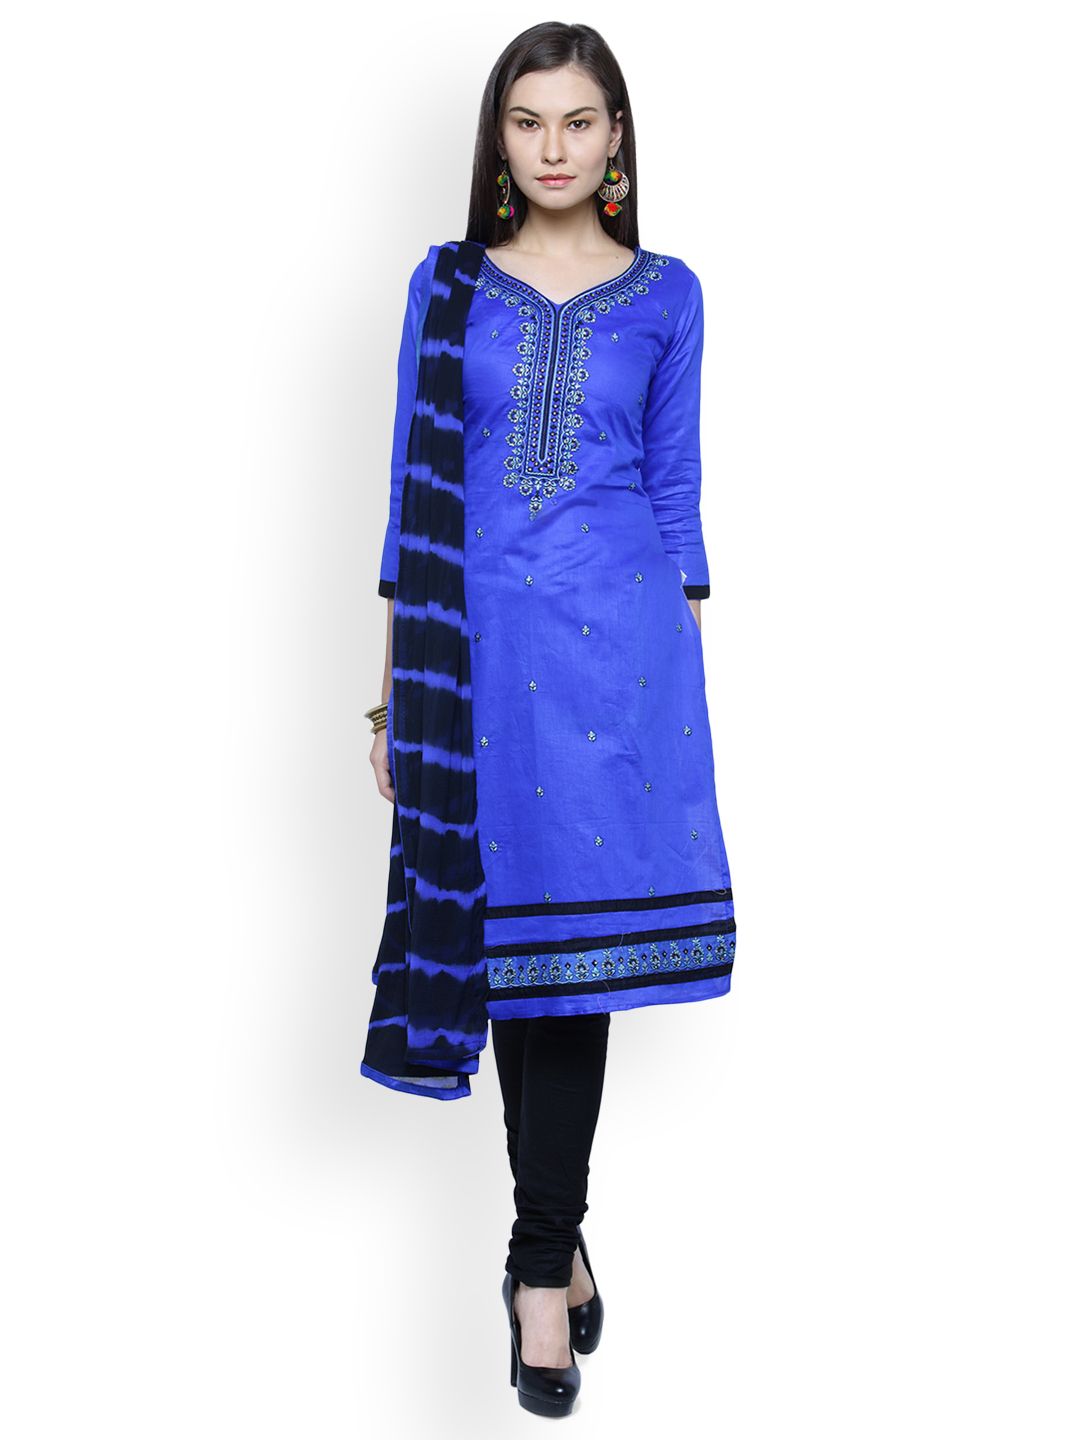 Kvsfab Blue & Black Satin Unstitched Dress Material Price in India